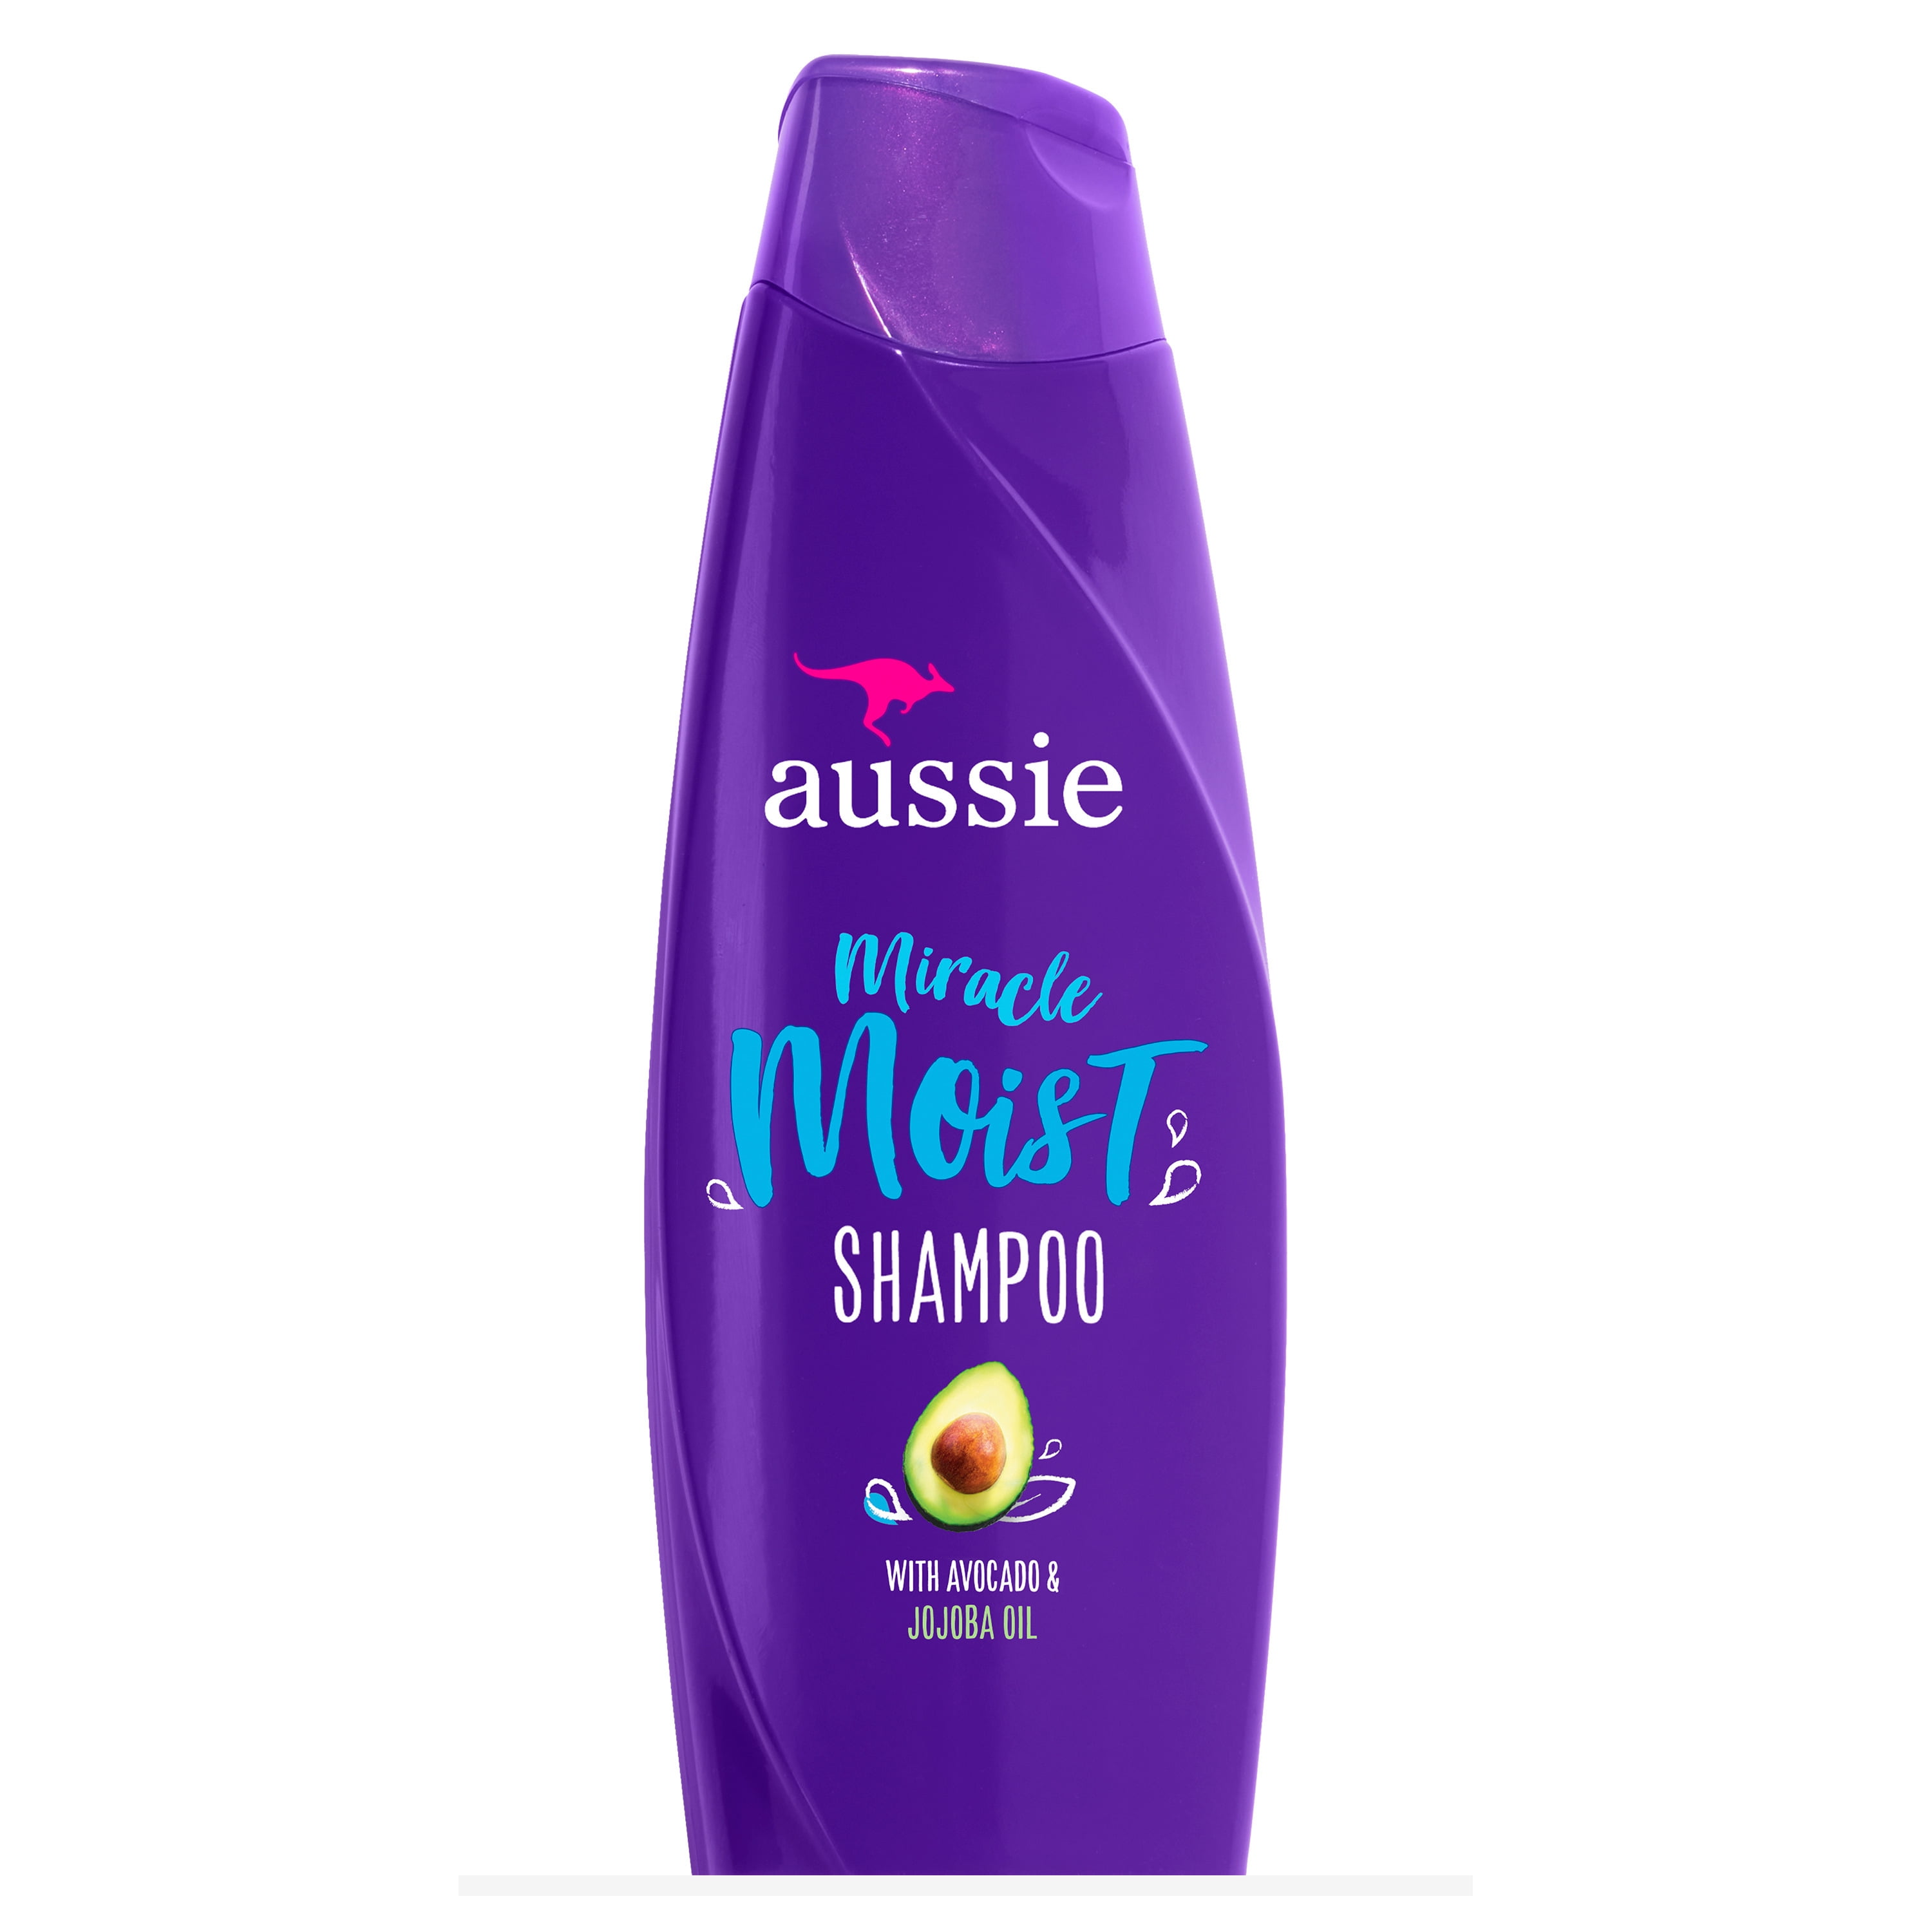 Aussie Miracle Moist Shampoo with Avocado, Paraben Free, 12.1 oz - Walmart.com